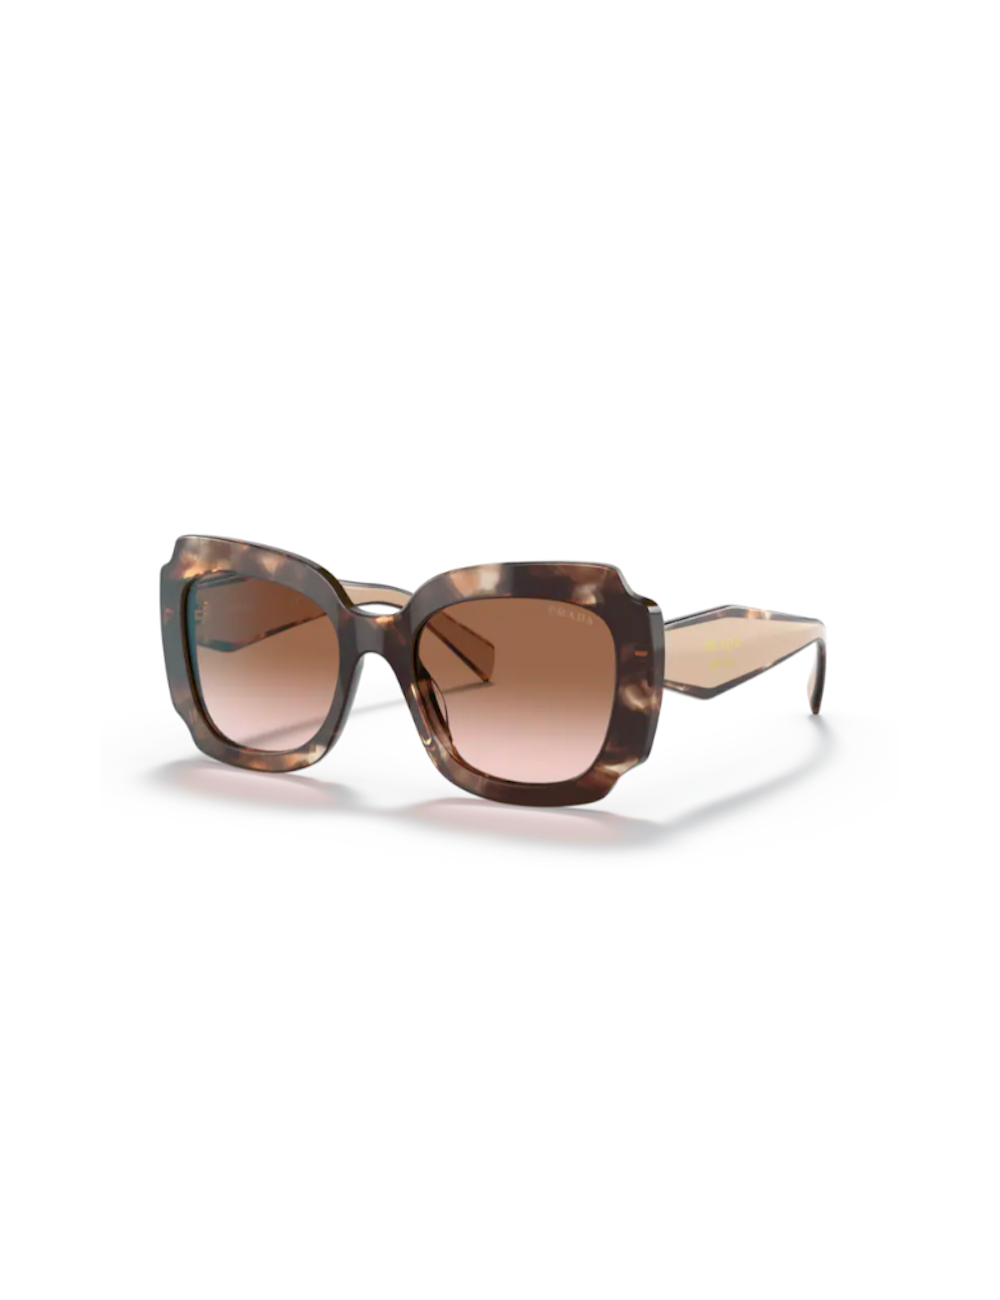 Prada PR 16YS 01R0A6 sunglasses for women – Ottica Mauro